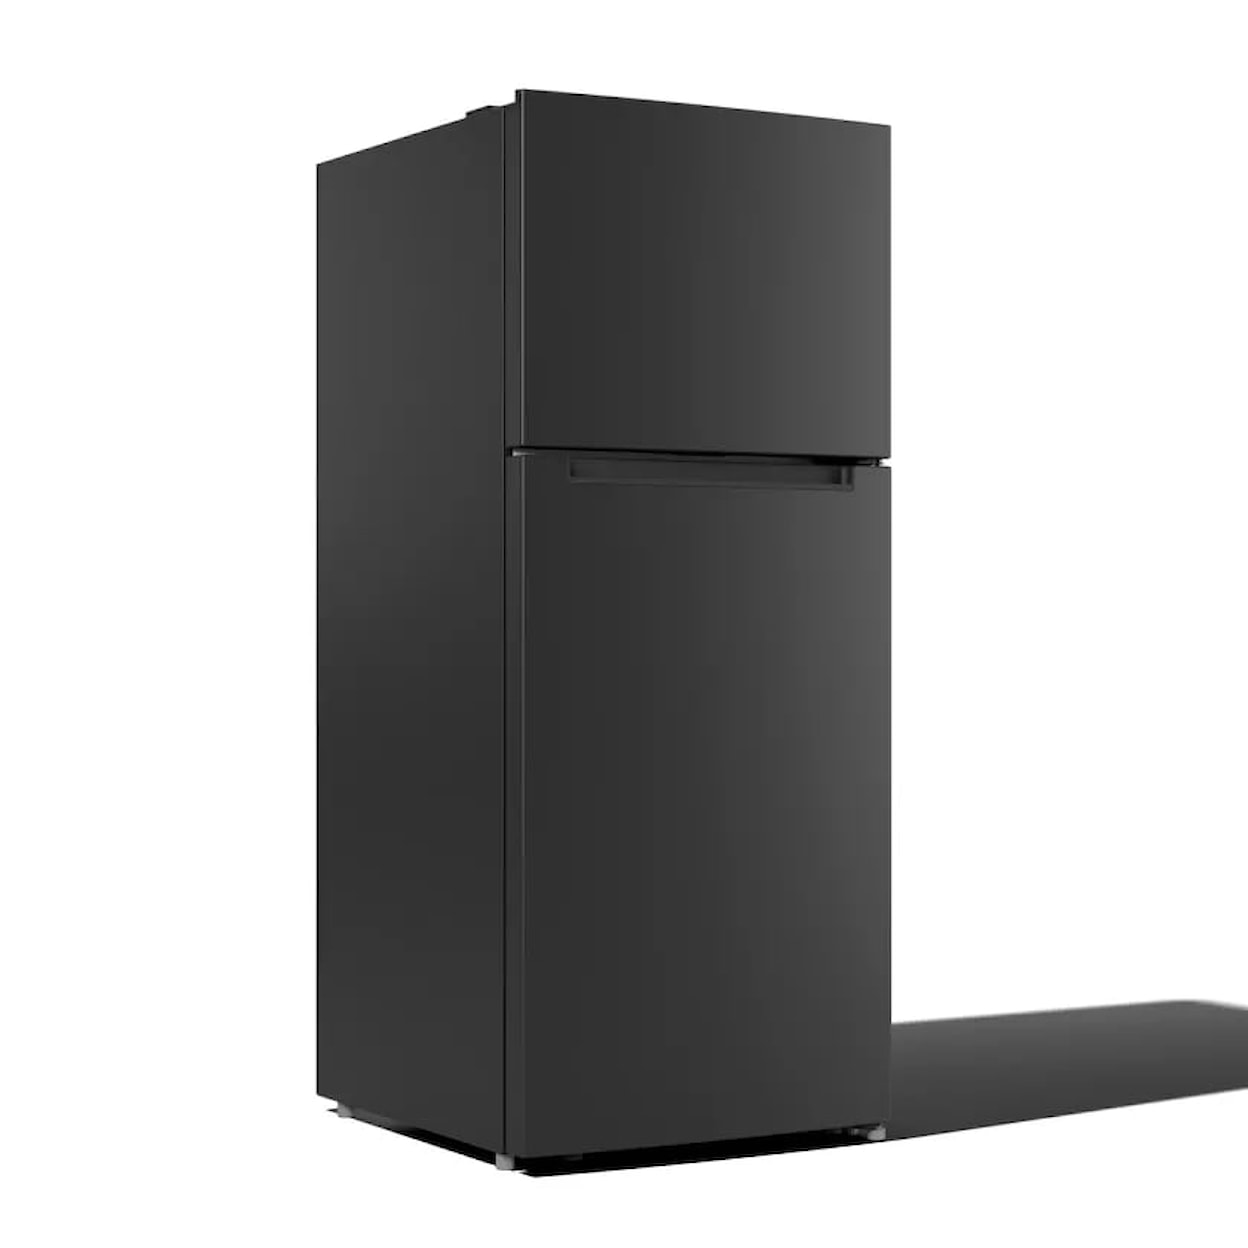 Element Electronics Appliances 17.6 CU. FT. TOP FREEZER REFRIGERATOR BLACK